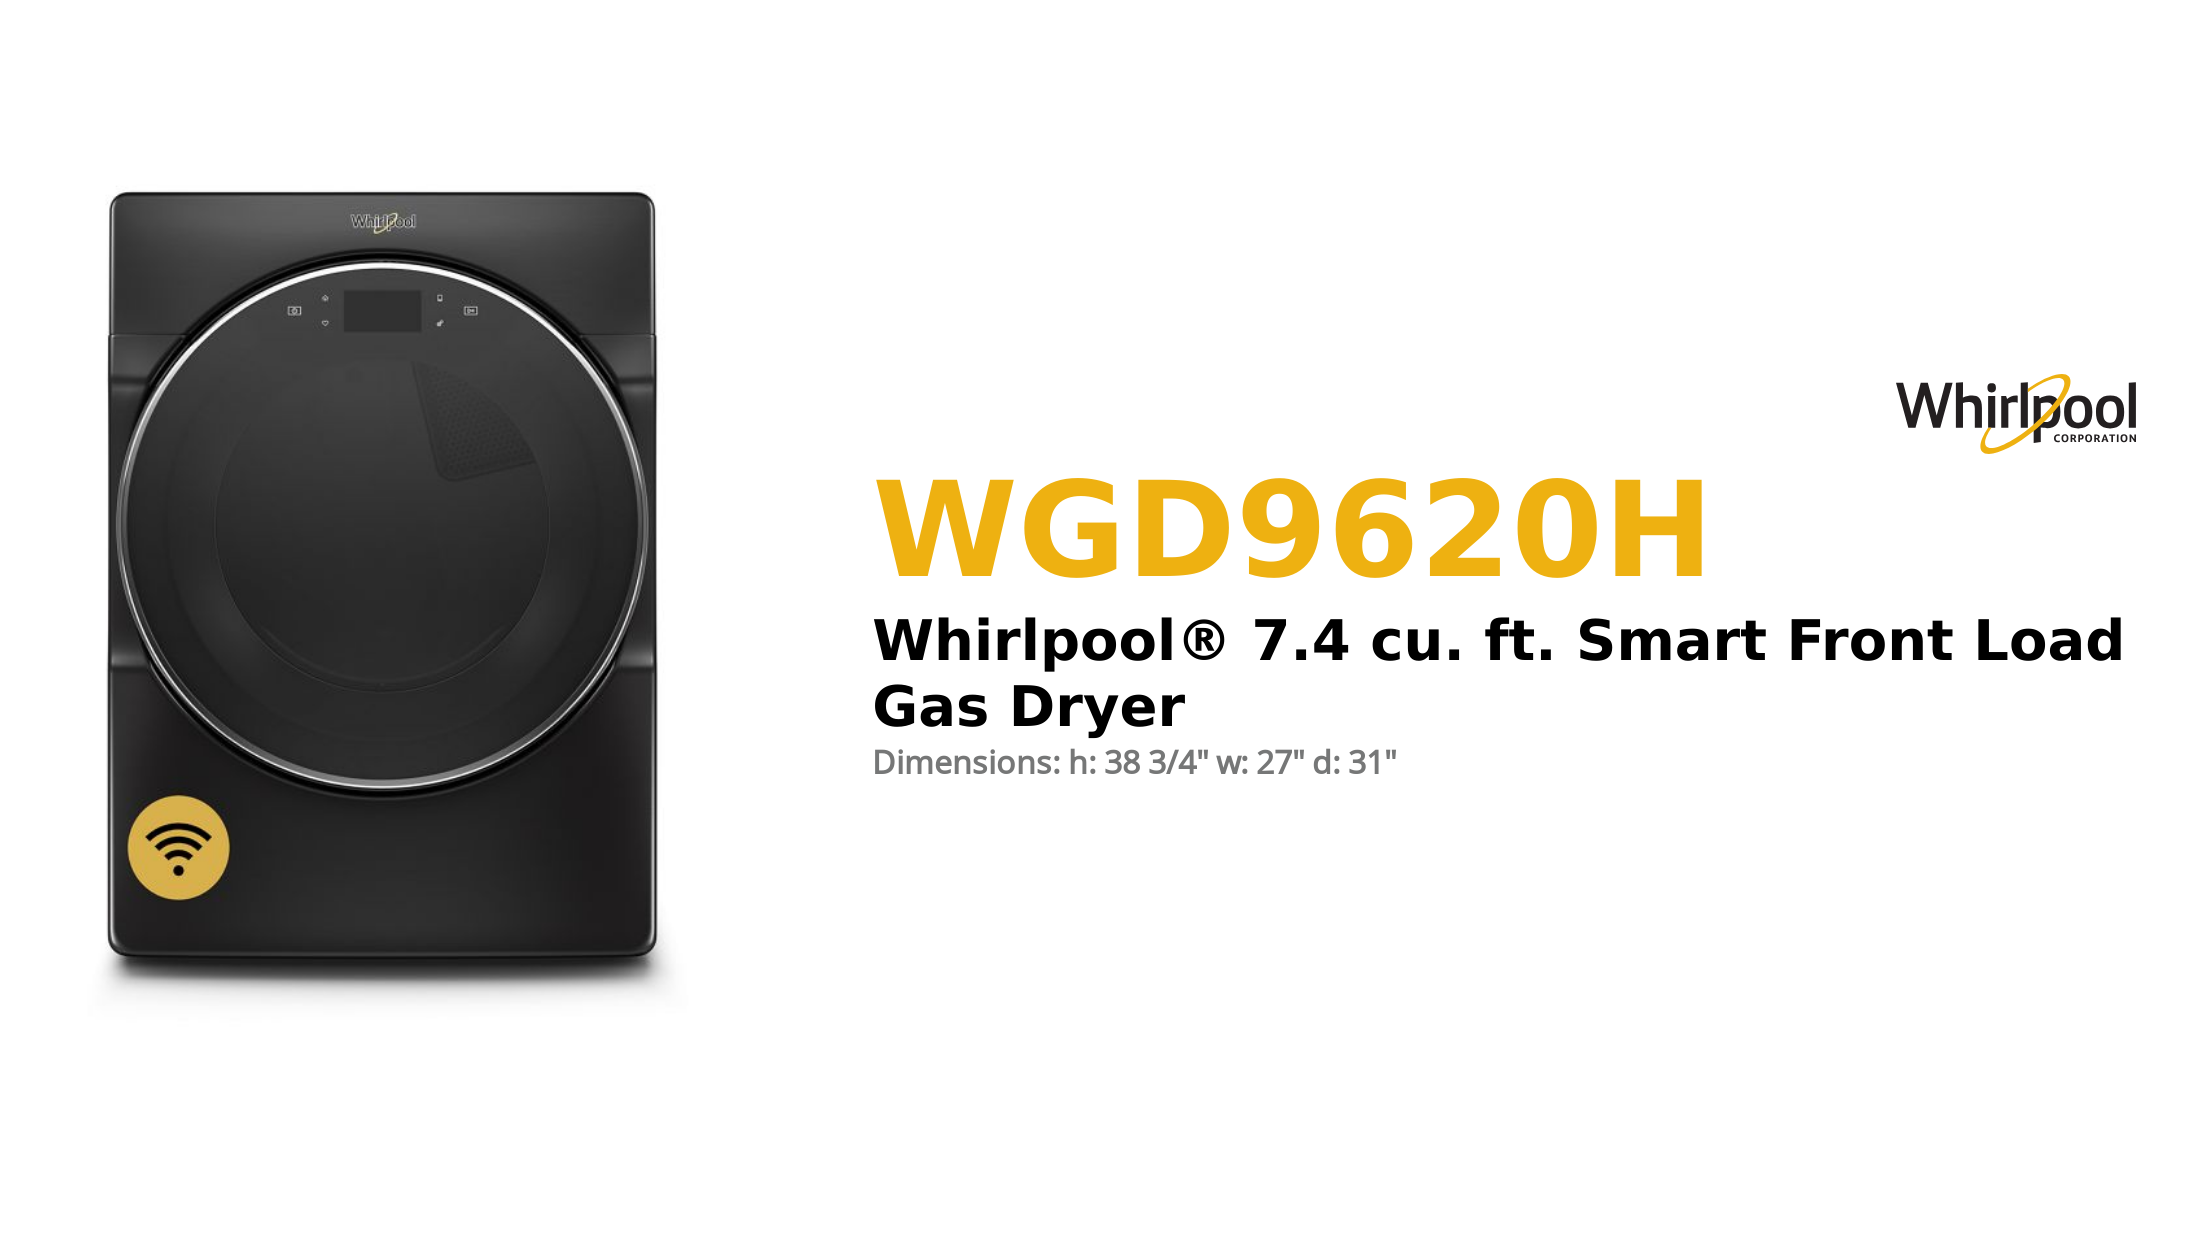 Whirlpool® 7.4 cu. ft. Smart Front Load Gas Dryer